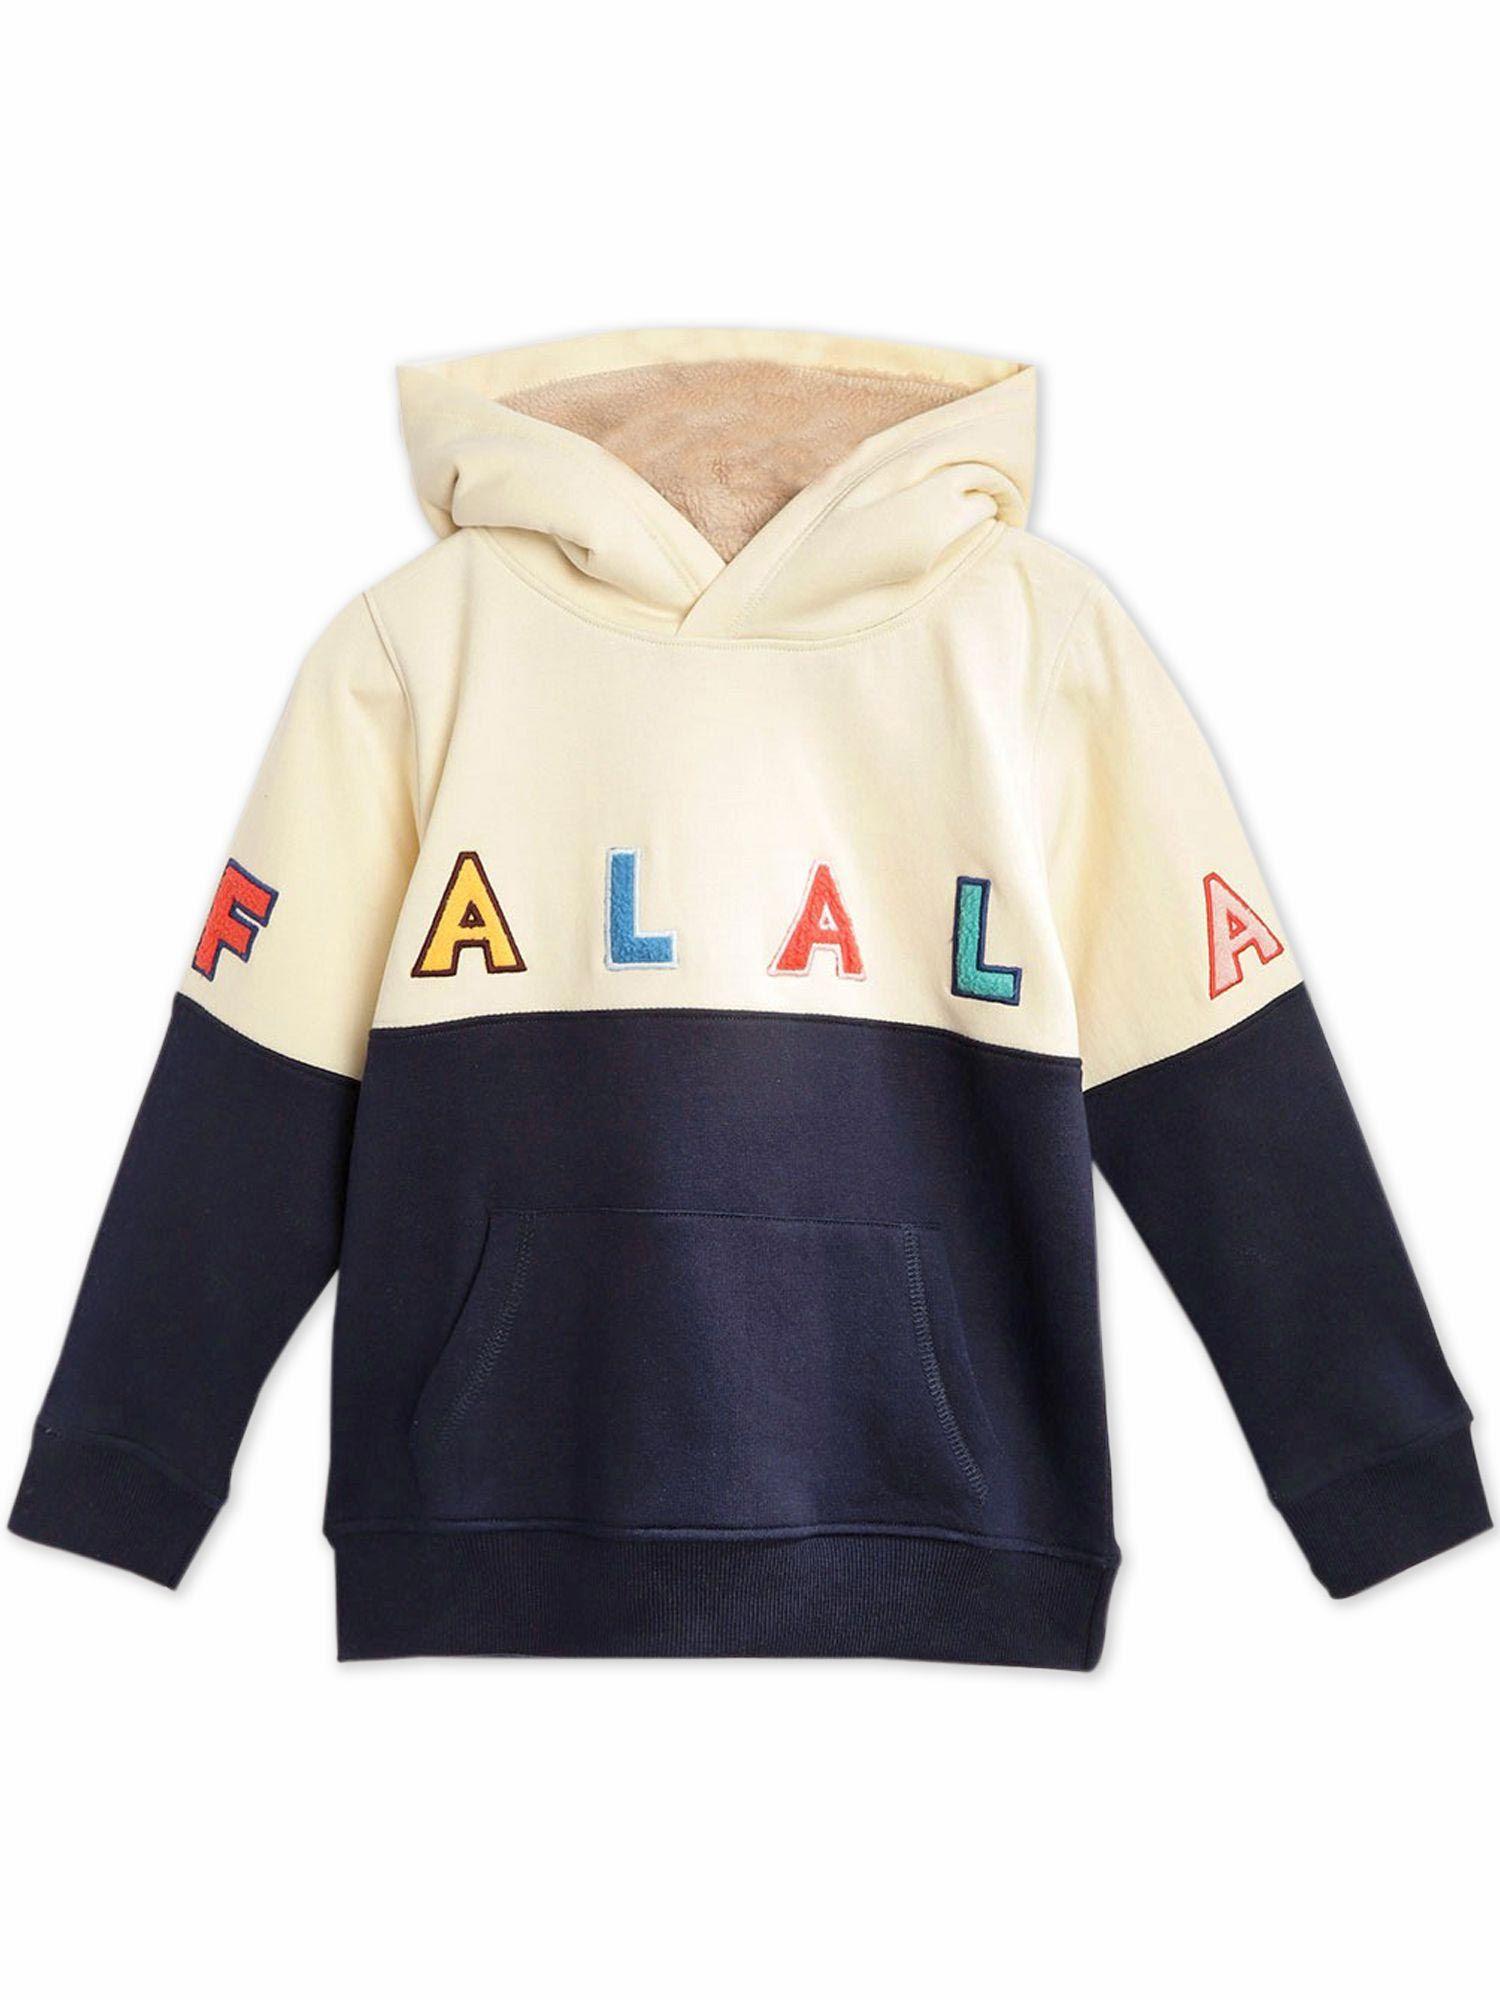 off white falala applique hoodie sweatshirt